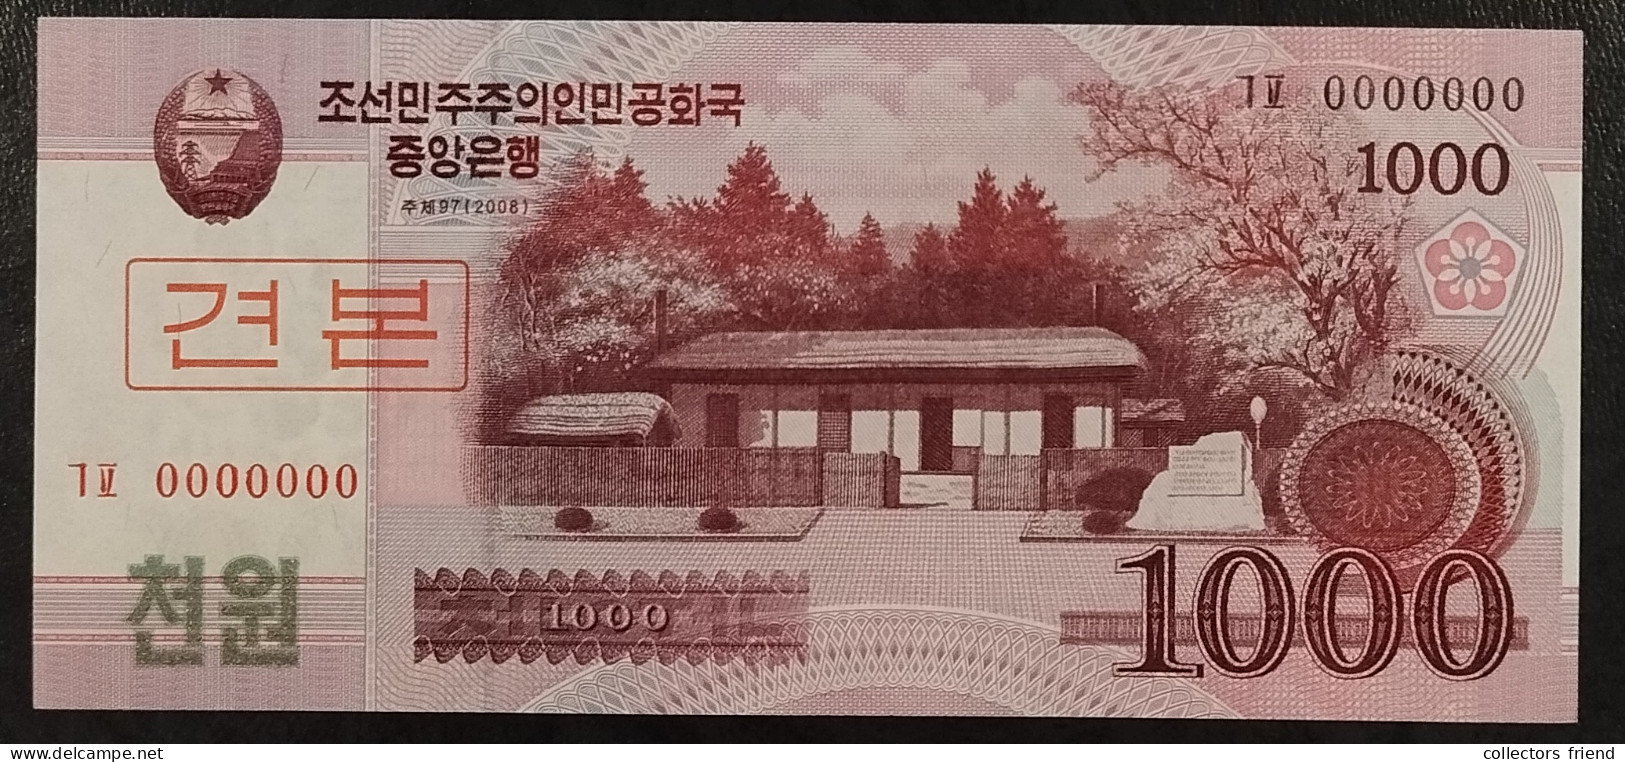 North Korea Nordkorea - 2008 - 1000 Won (Specimen) - P64s UNC - Korea, North